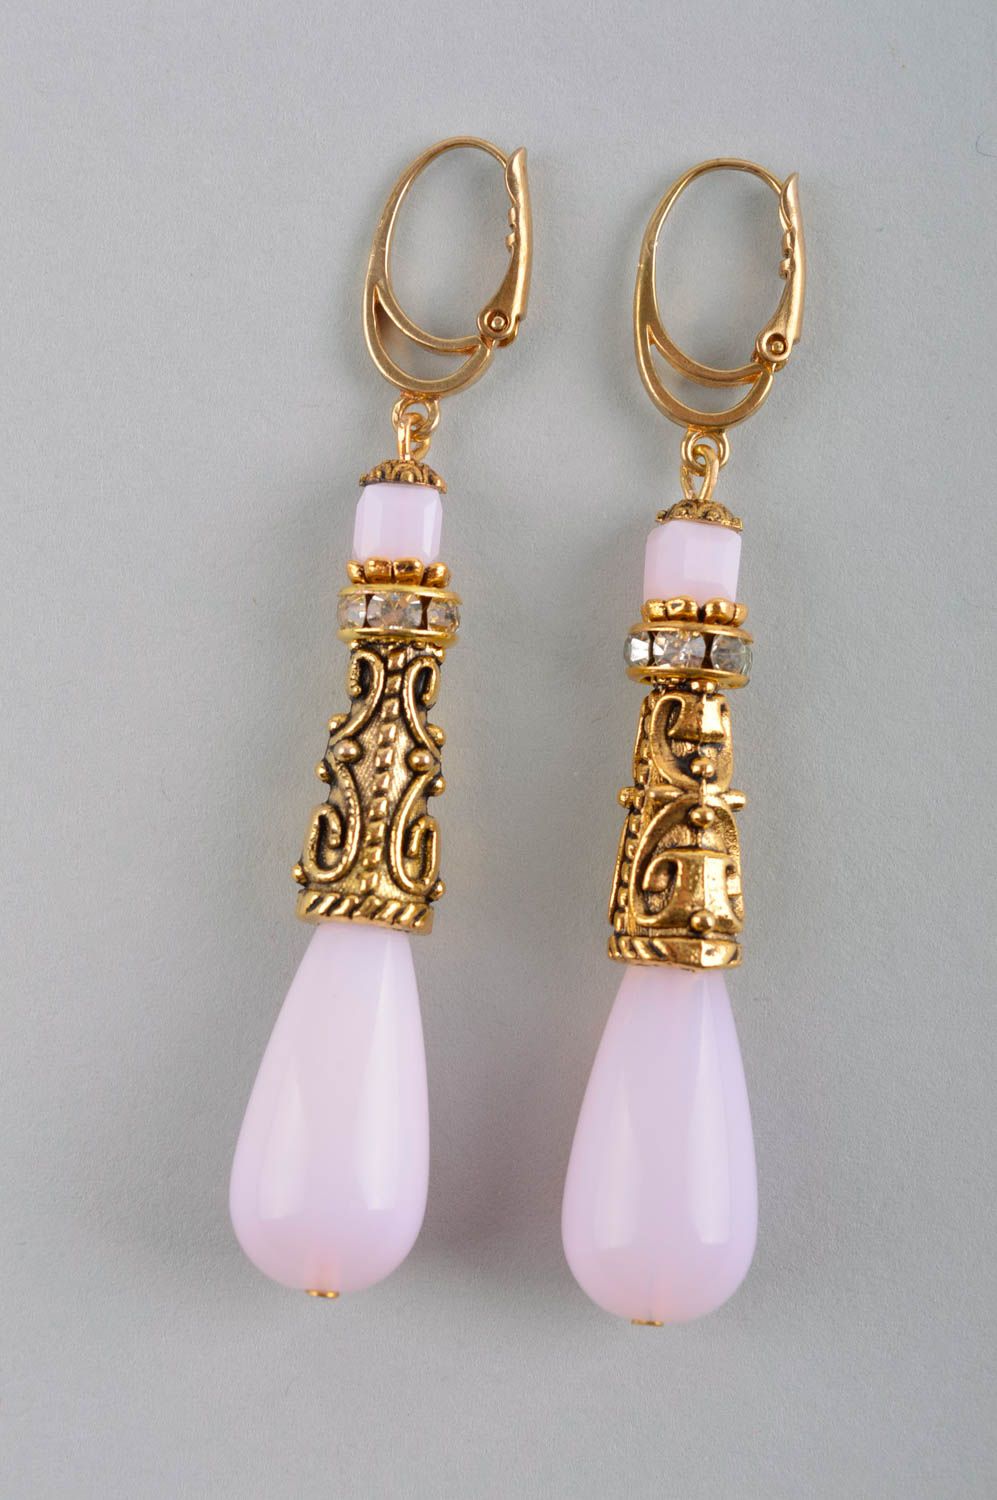 Handmade earrings gemstone jewelry earrings for girls designer accessories photo 3